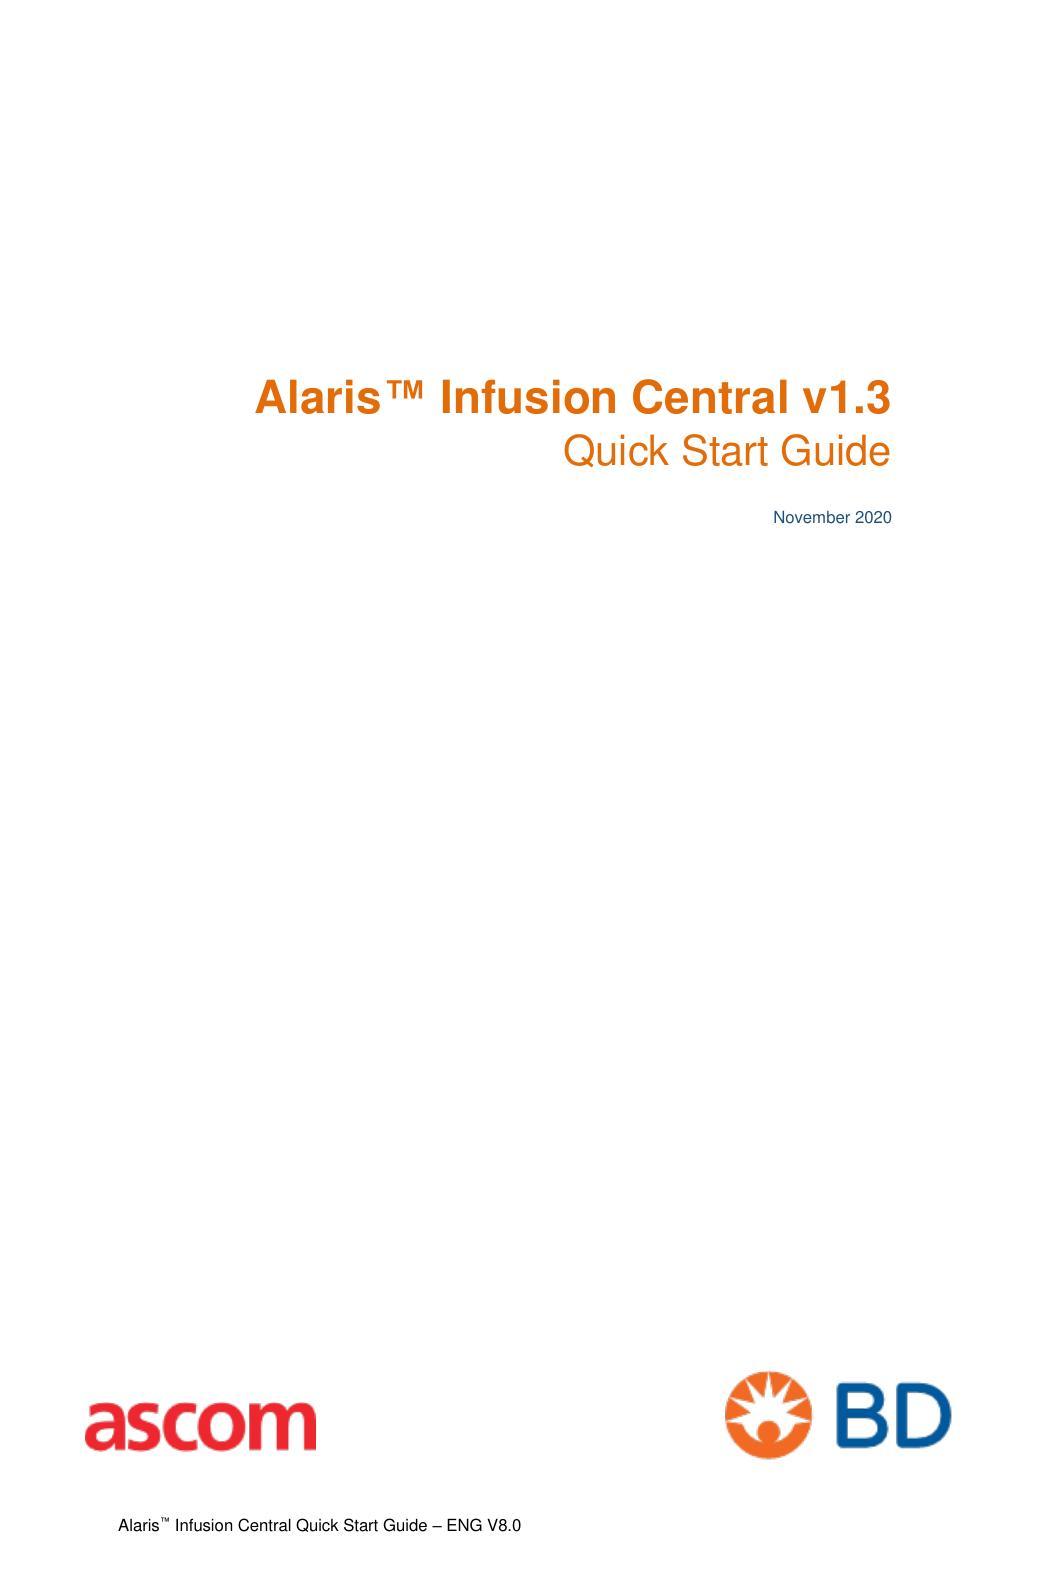 alaris-tm-infusion-central-version-13-quick-start-guide.pdf